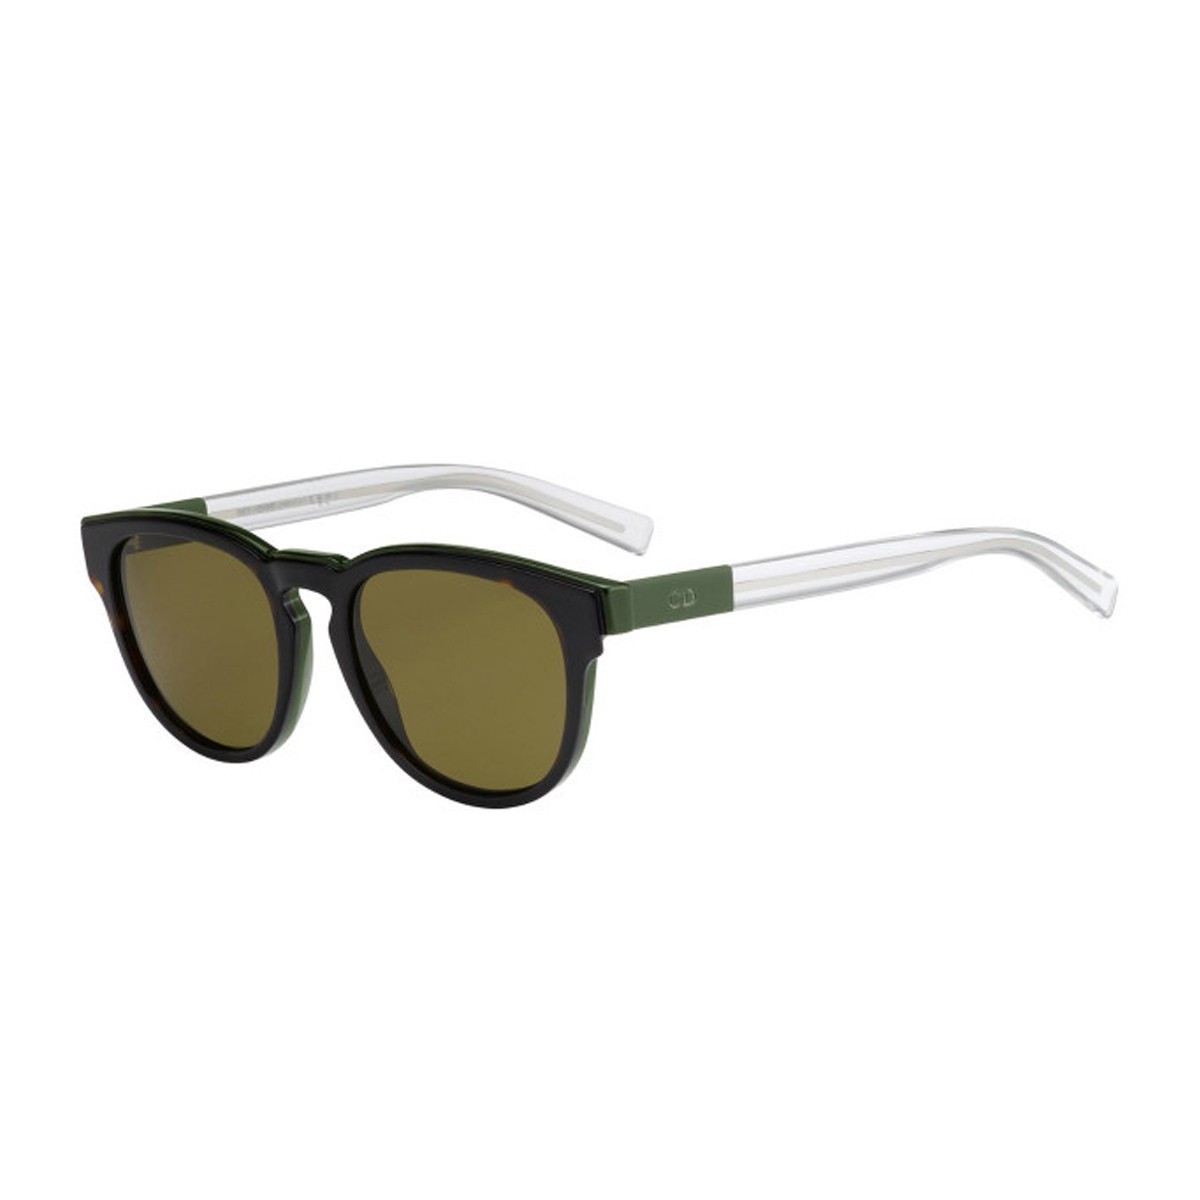 Dior Blacktie212s | Men's sunglasses